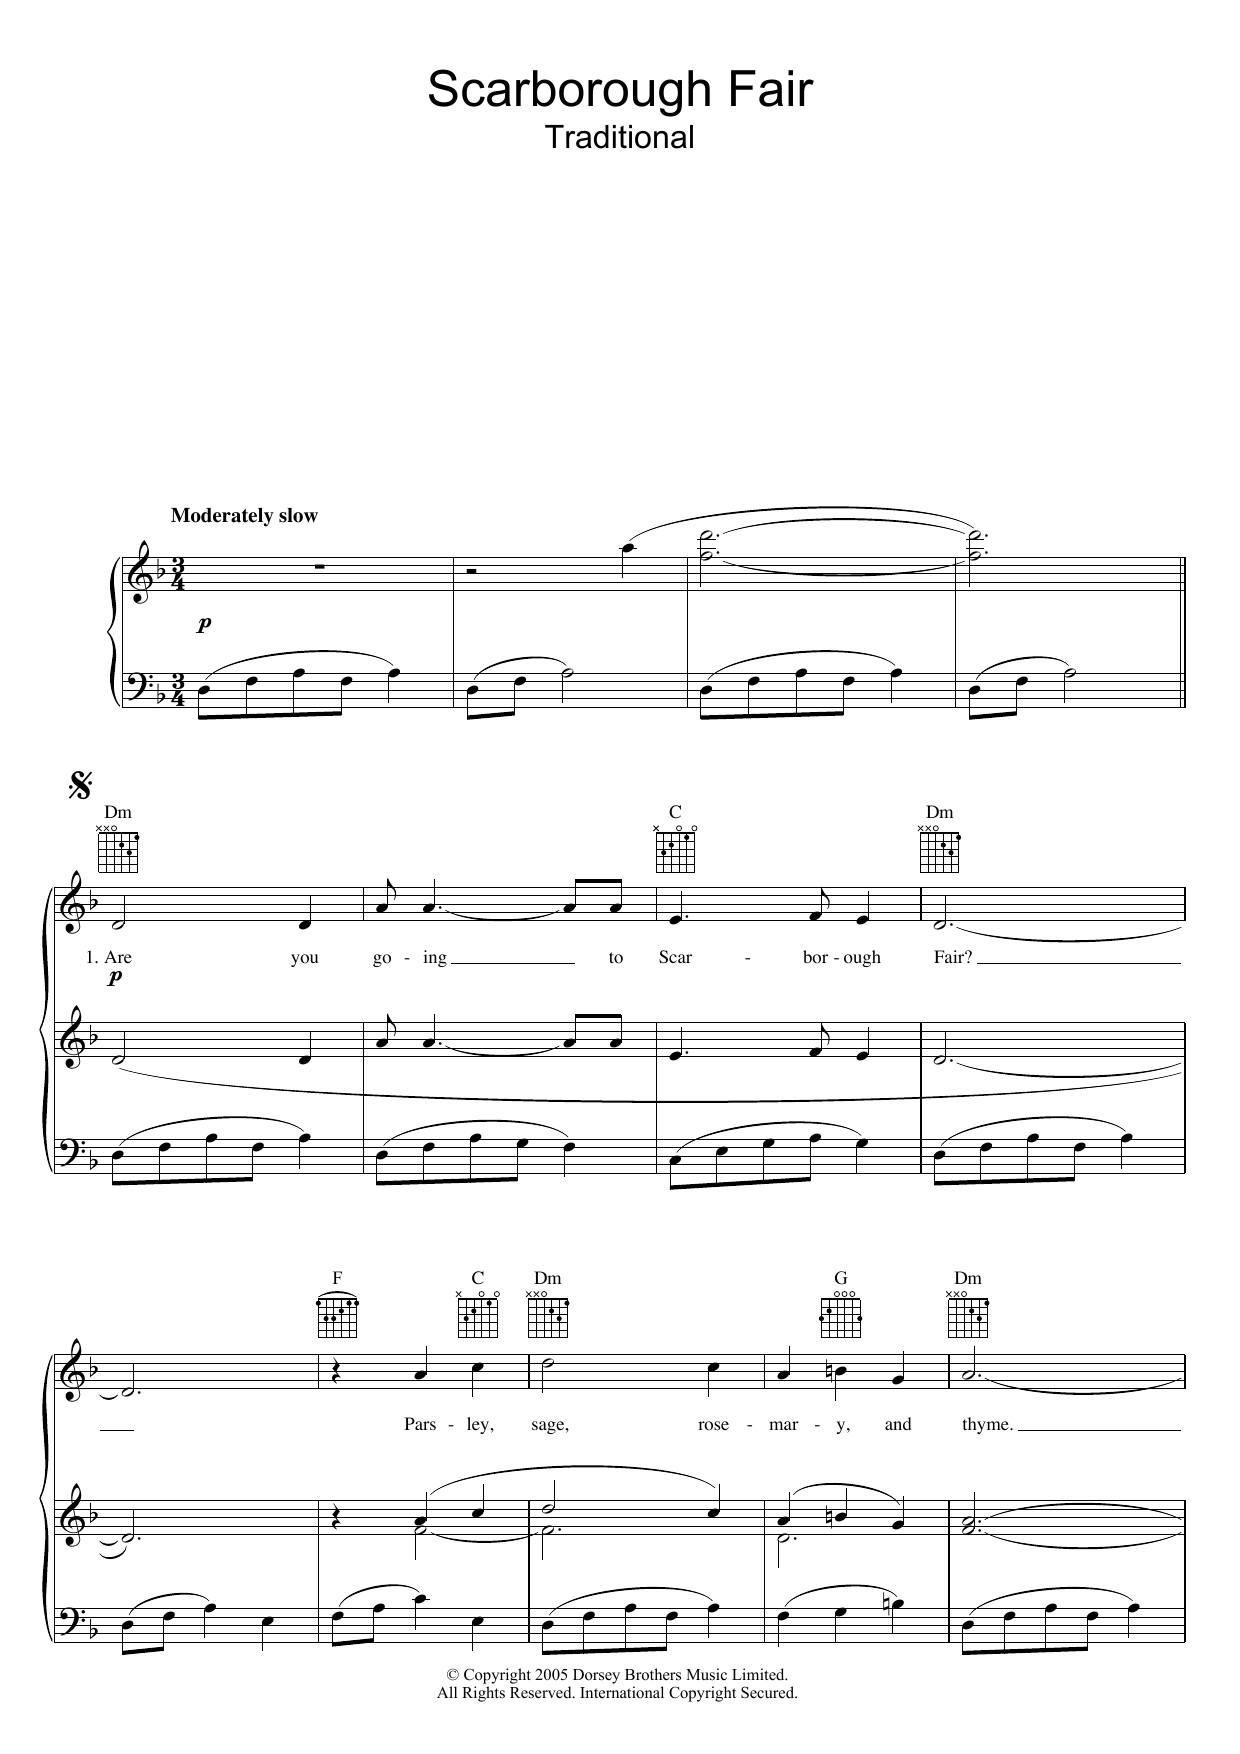 Traditional Scarborough Fair Sheet Music Notes & Chords for Banjo Lyrics & Chords - Download or Print PDF